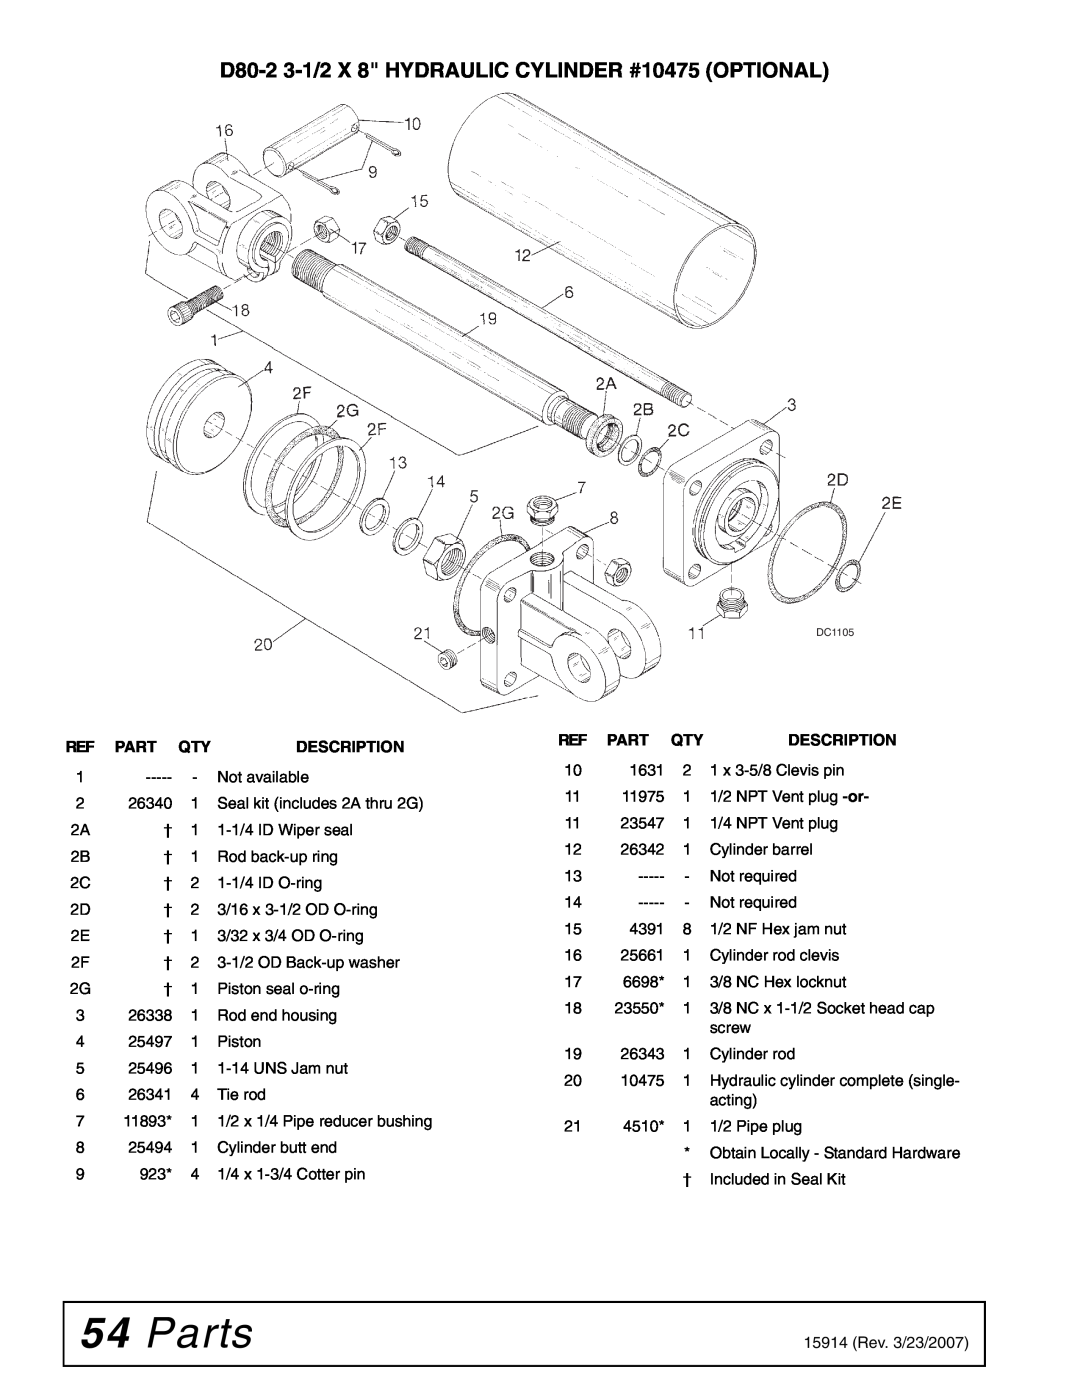 Woods Equipment MD80-2 manual Parts, D80-2 3-1/2X 8 HYDRAULIC CYLINDER #10475 OPTIONAL, Description 